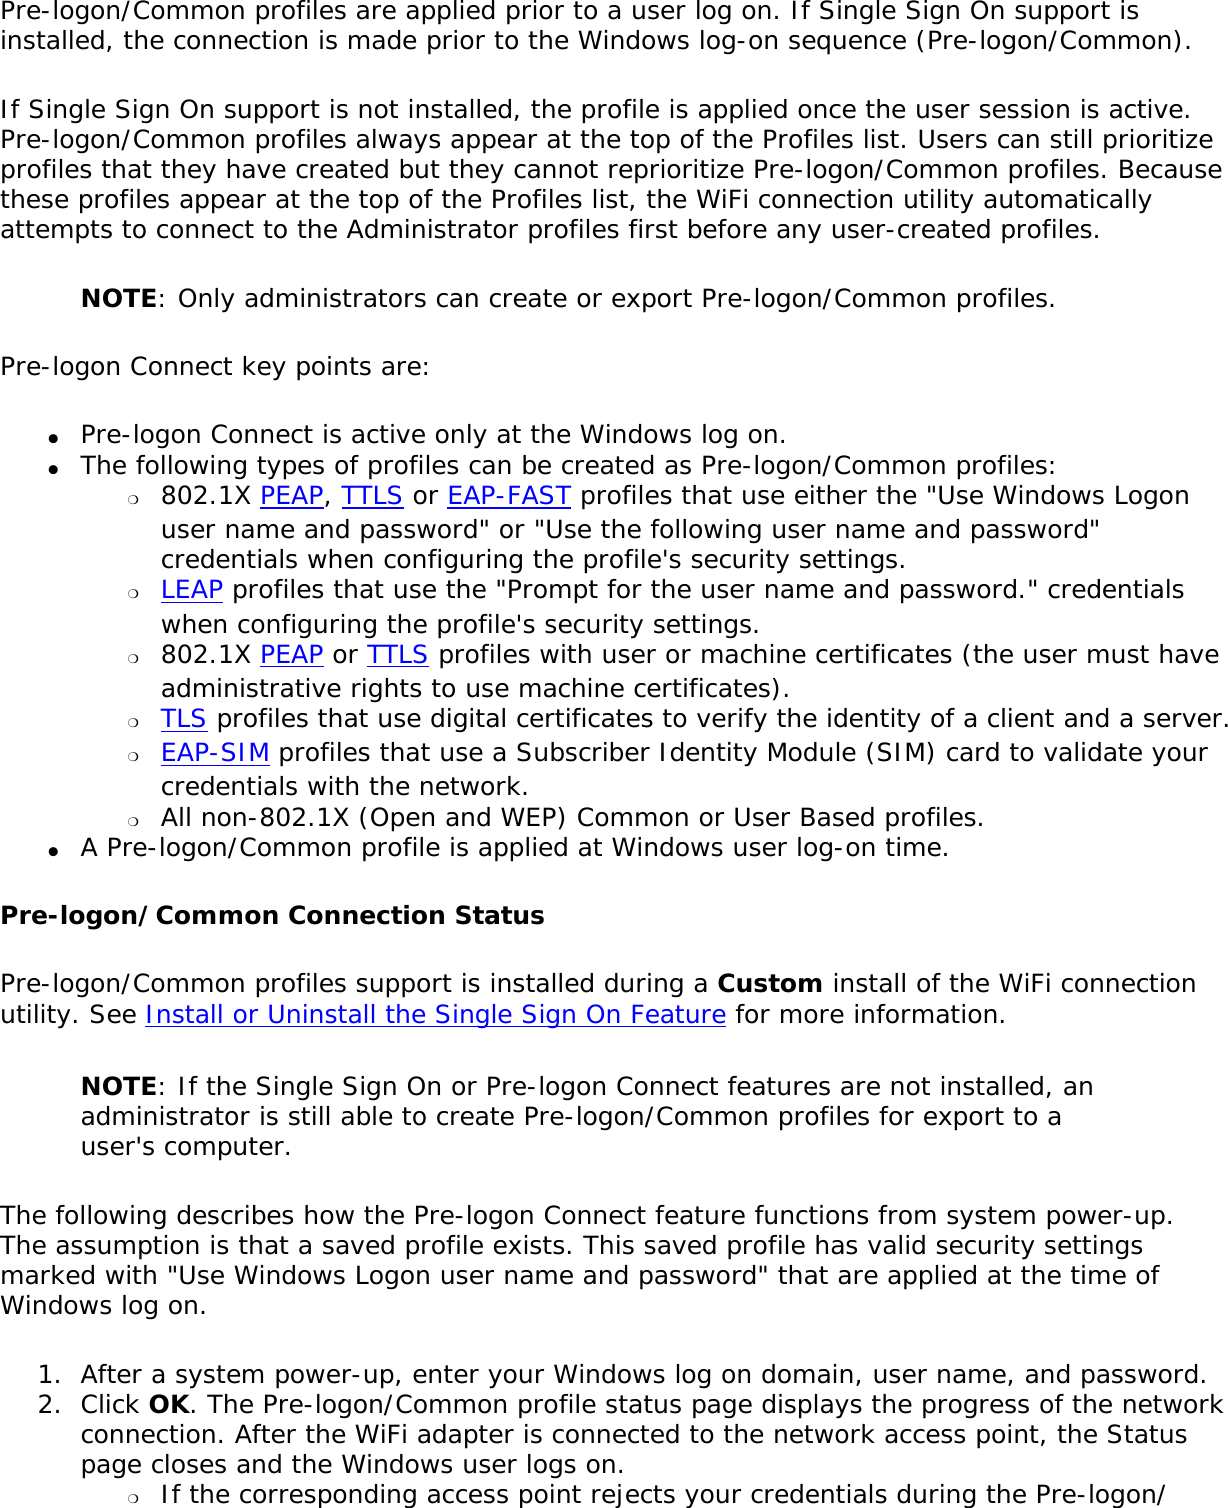 Page 121 of Intel 112BNMU Intel Centrino Wireless-N 1000 User Manual Contents